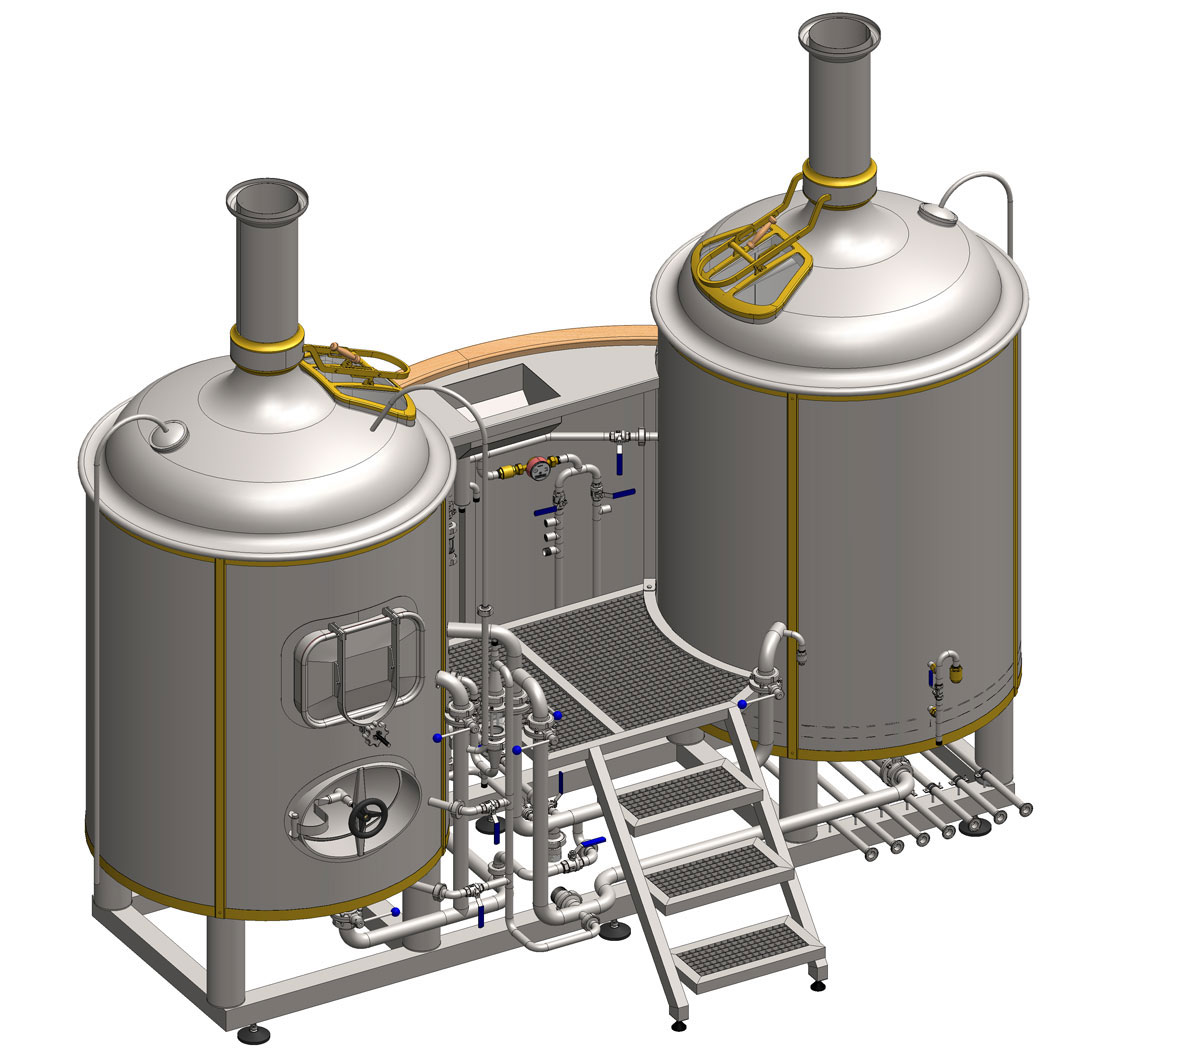 MODULO CLASSIC 500/600 Wort brew machine – the modular brewhouse